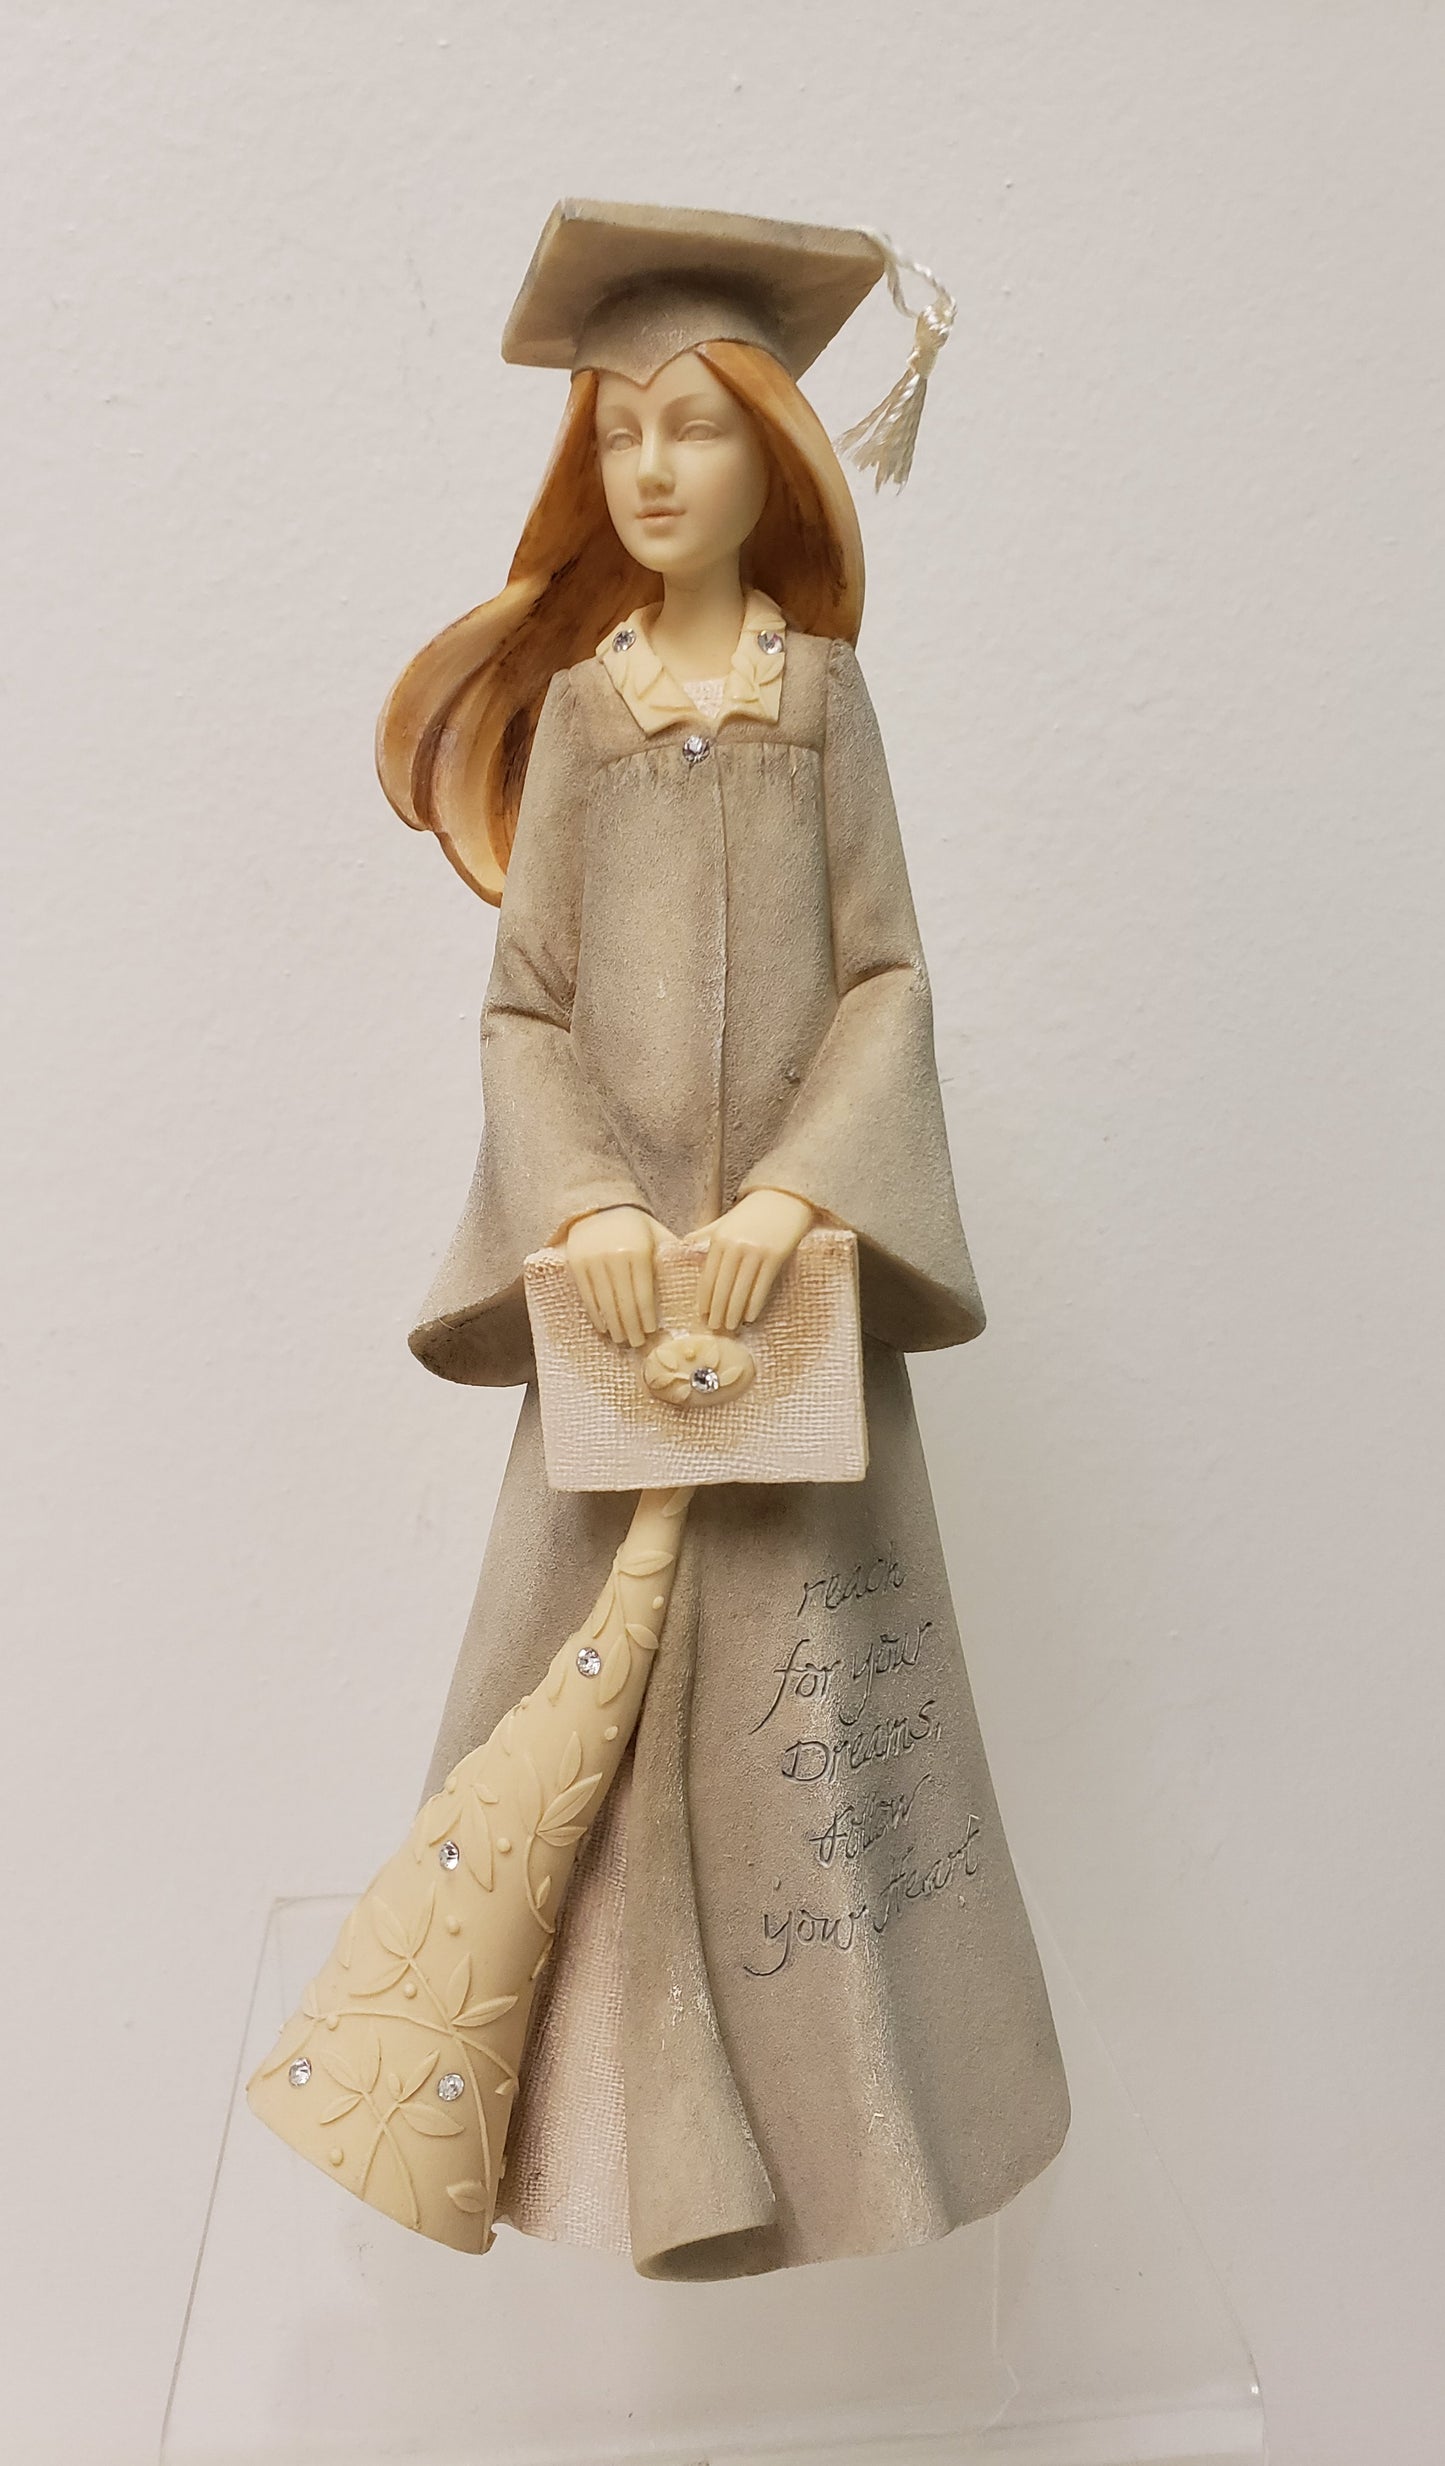 Enesco Figurine - Graduation Girl